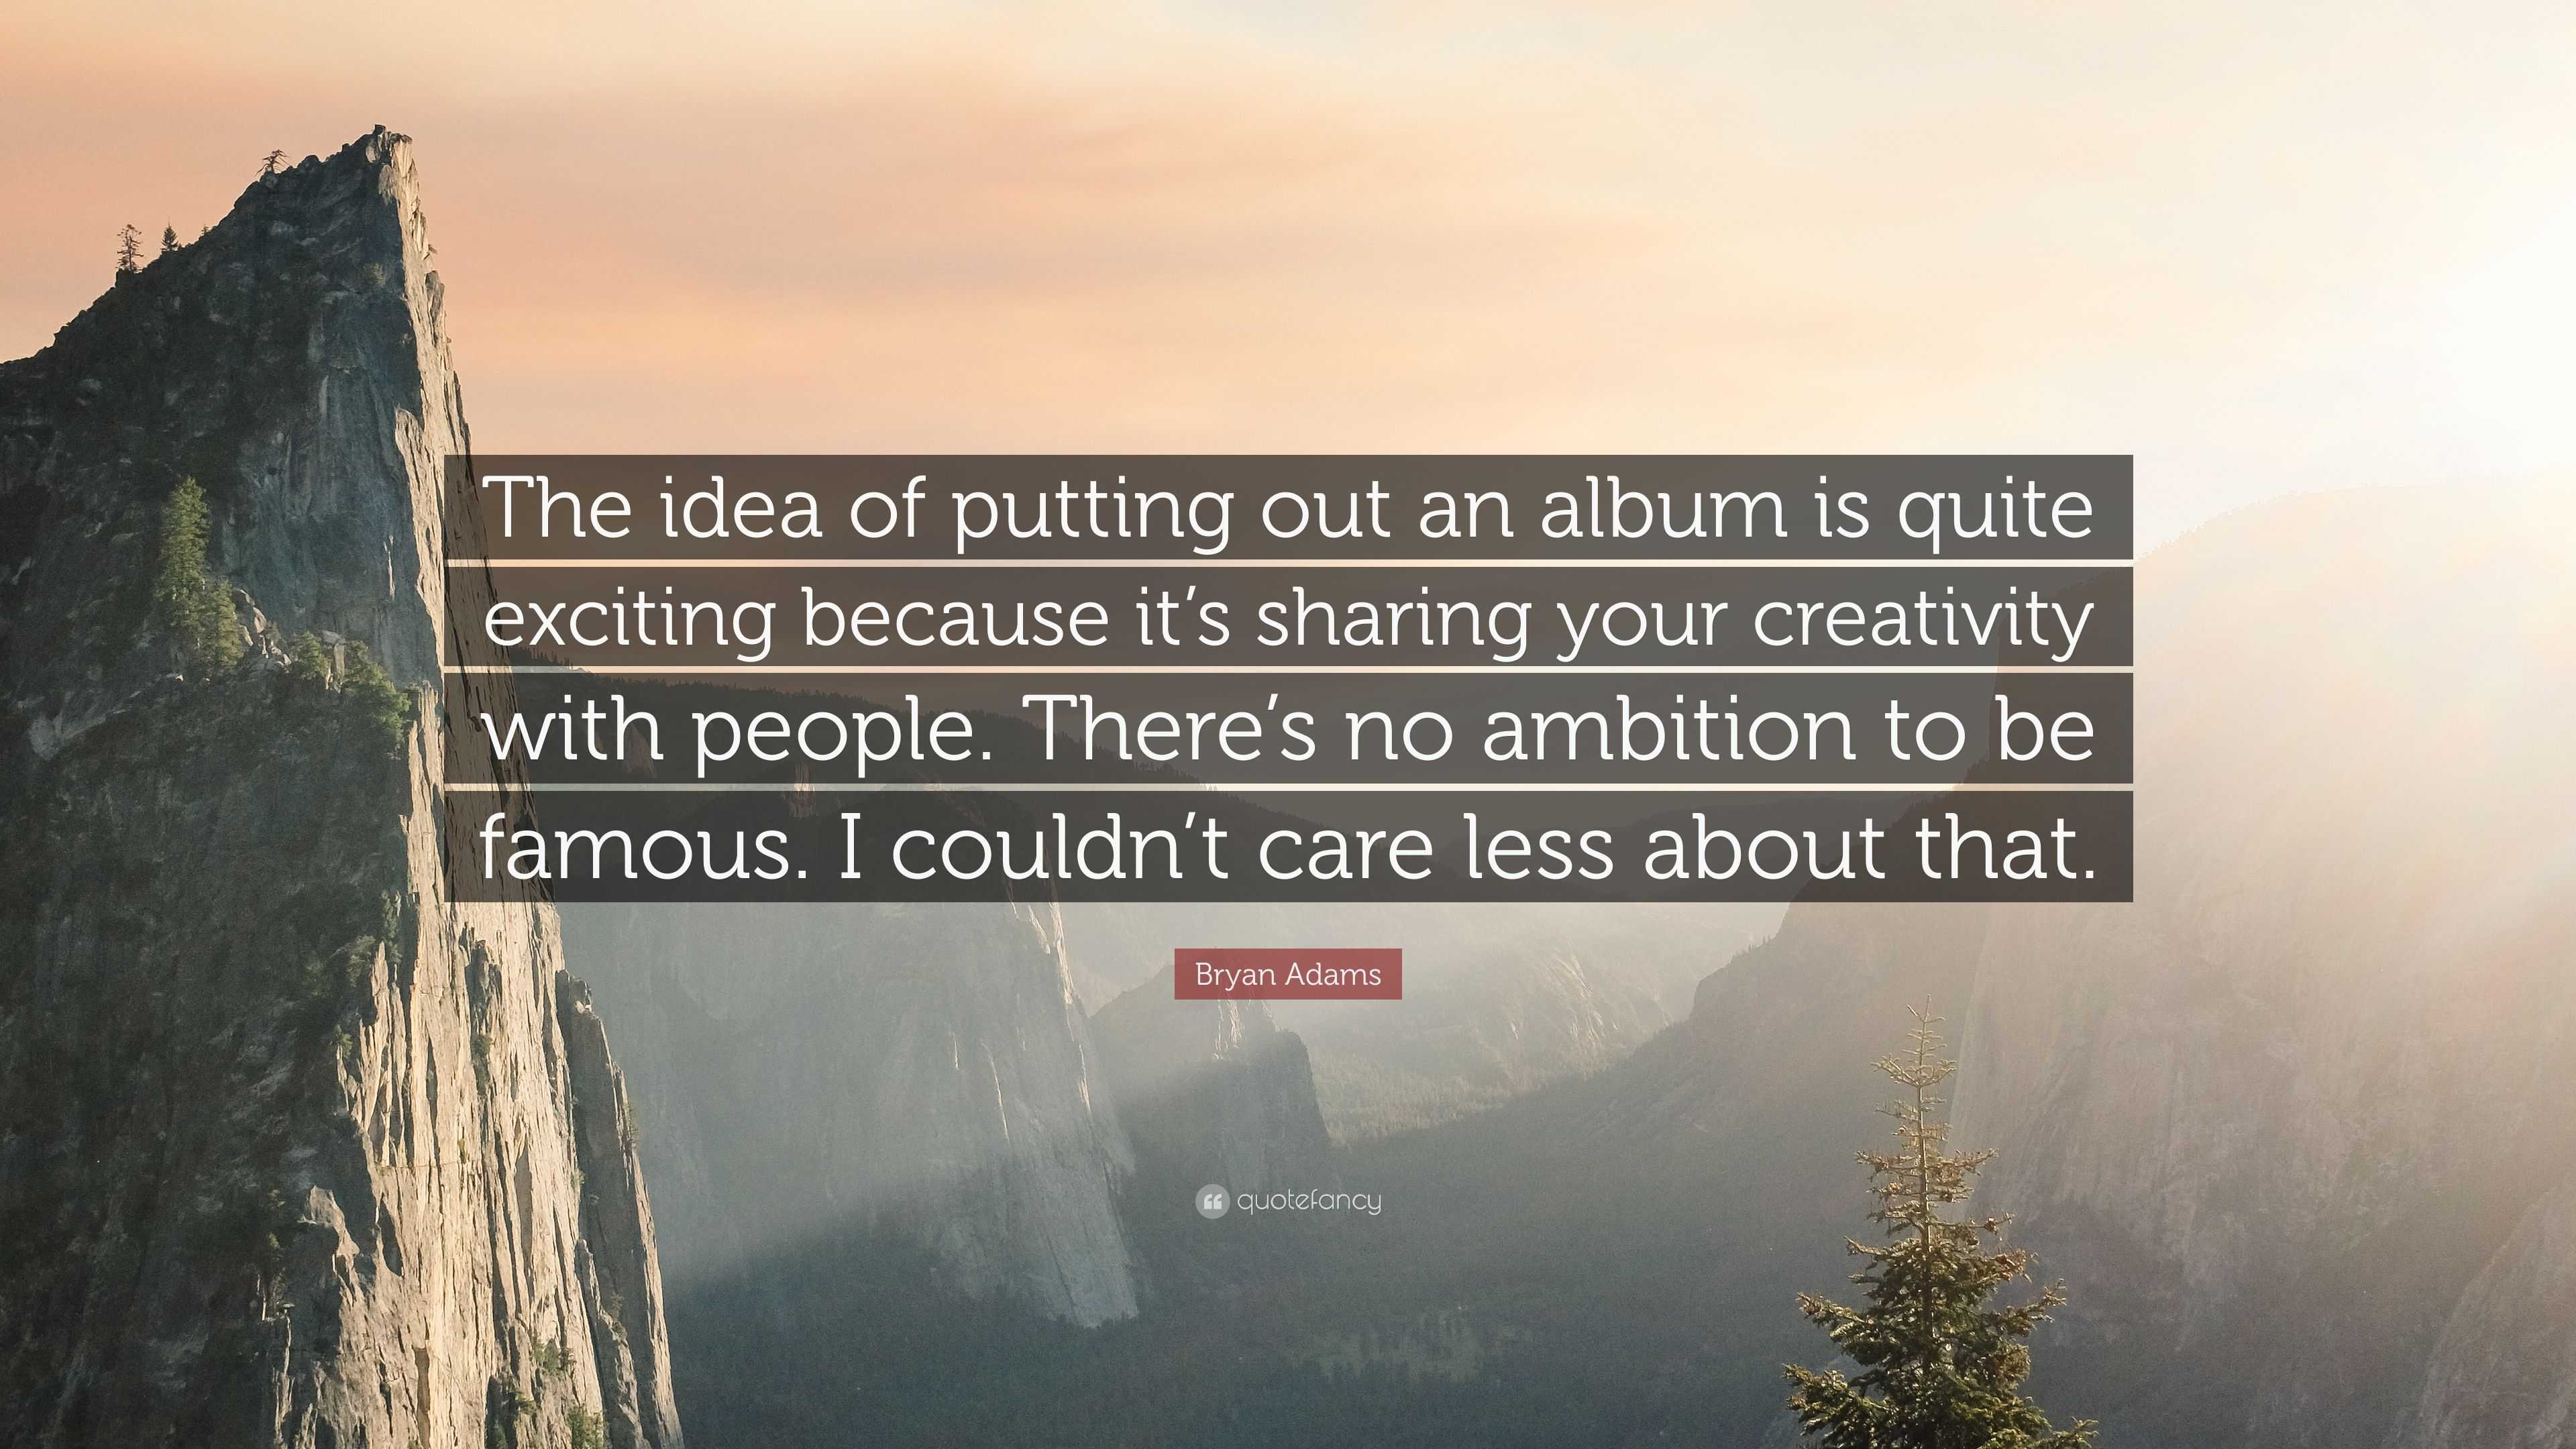 Bryan Adams on the simplicity behind his success